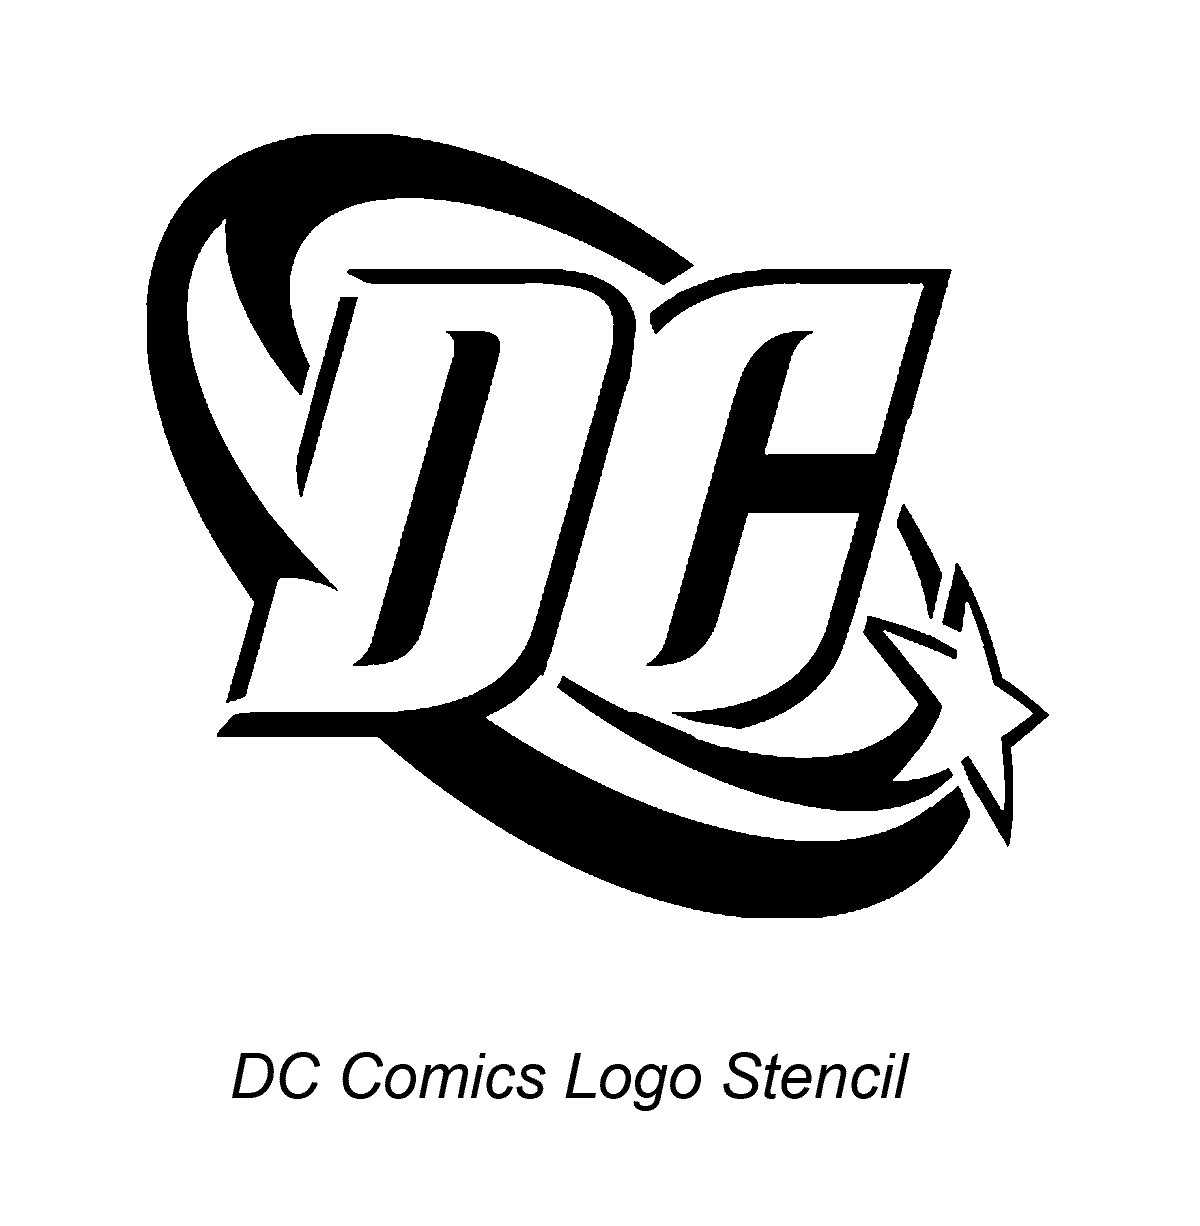 Black and White DC Logo - dc-comics-logo-image.gif 1 200×1 226 pixels | Design | DC Comics ...